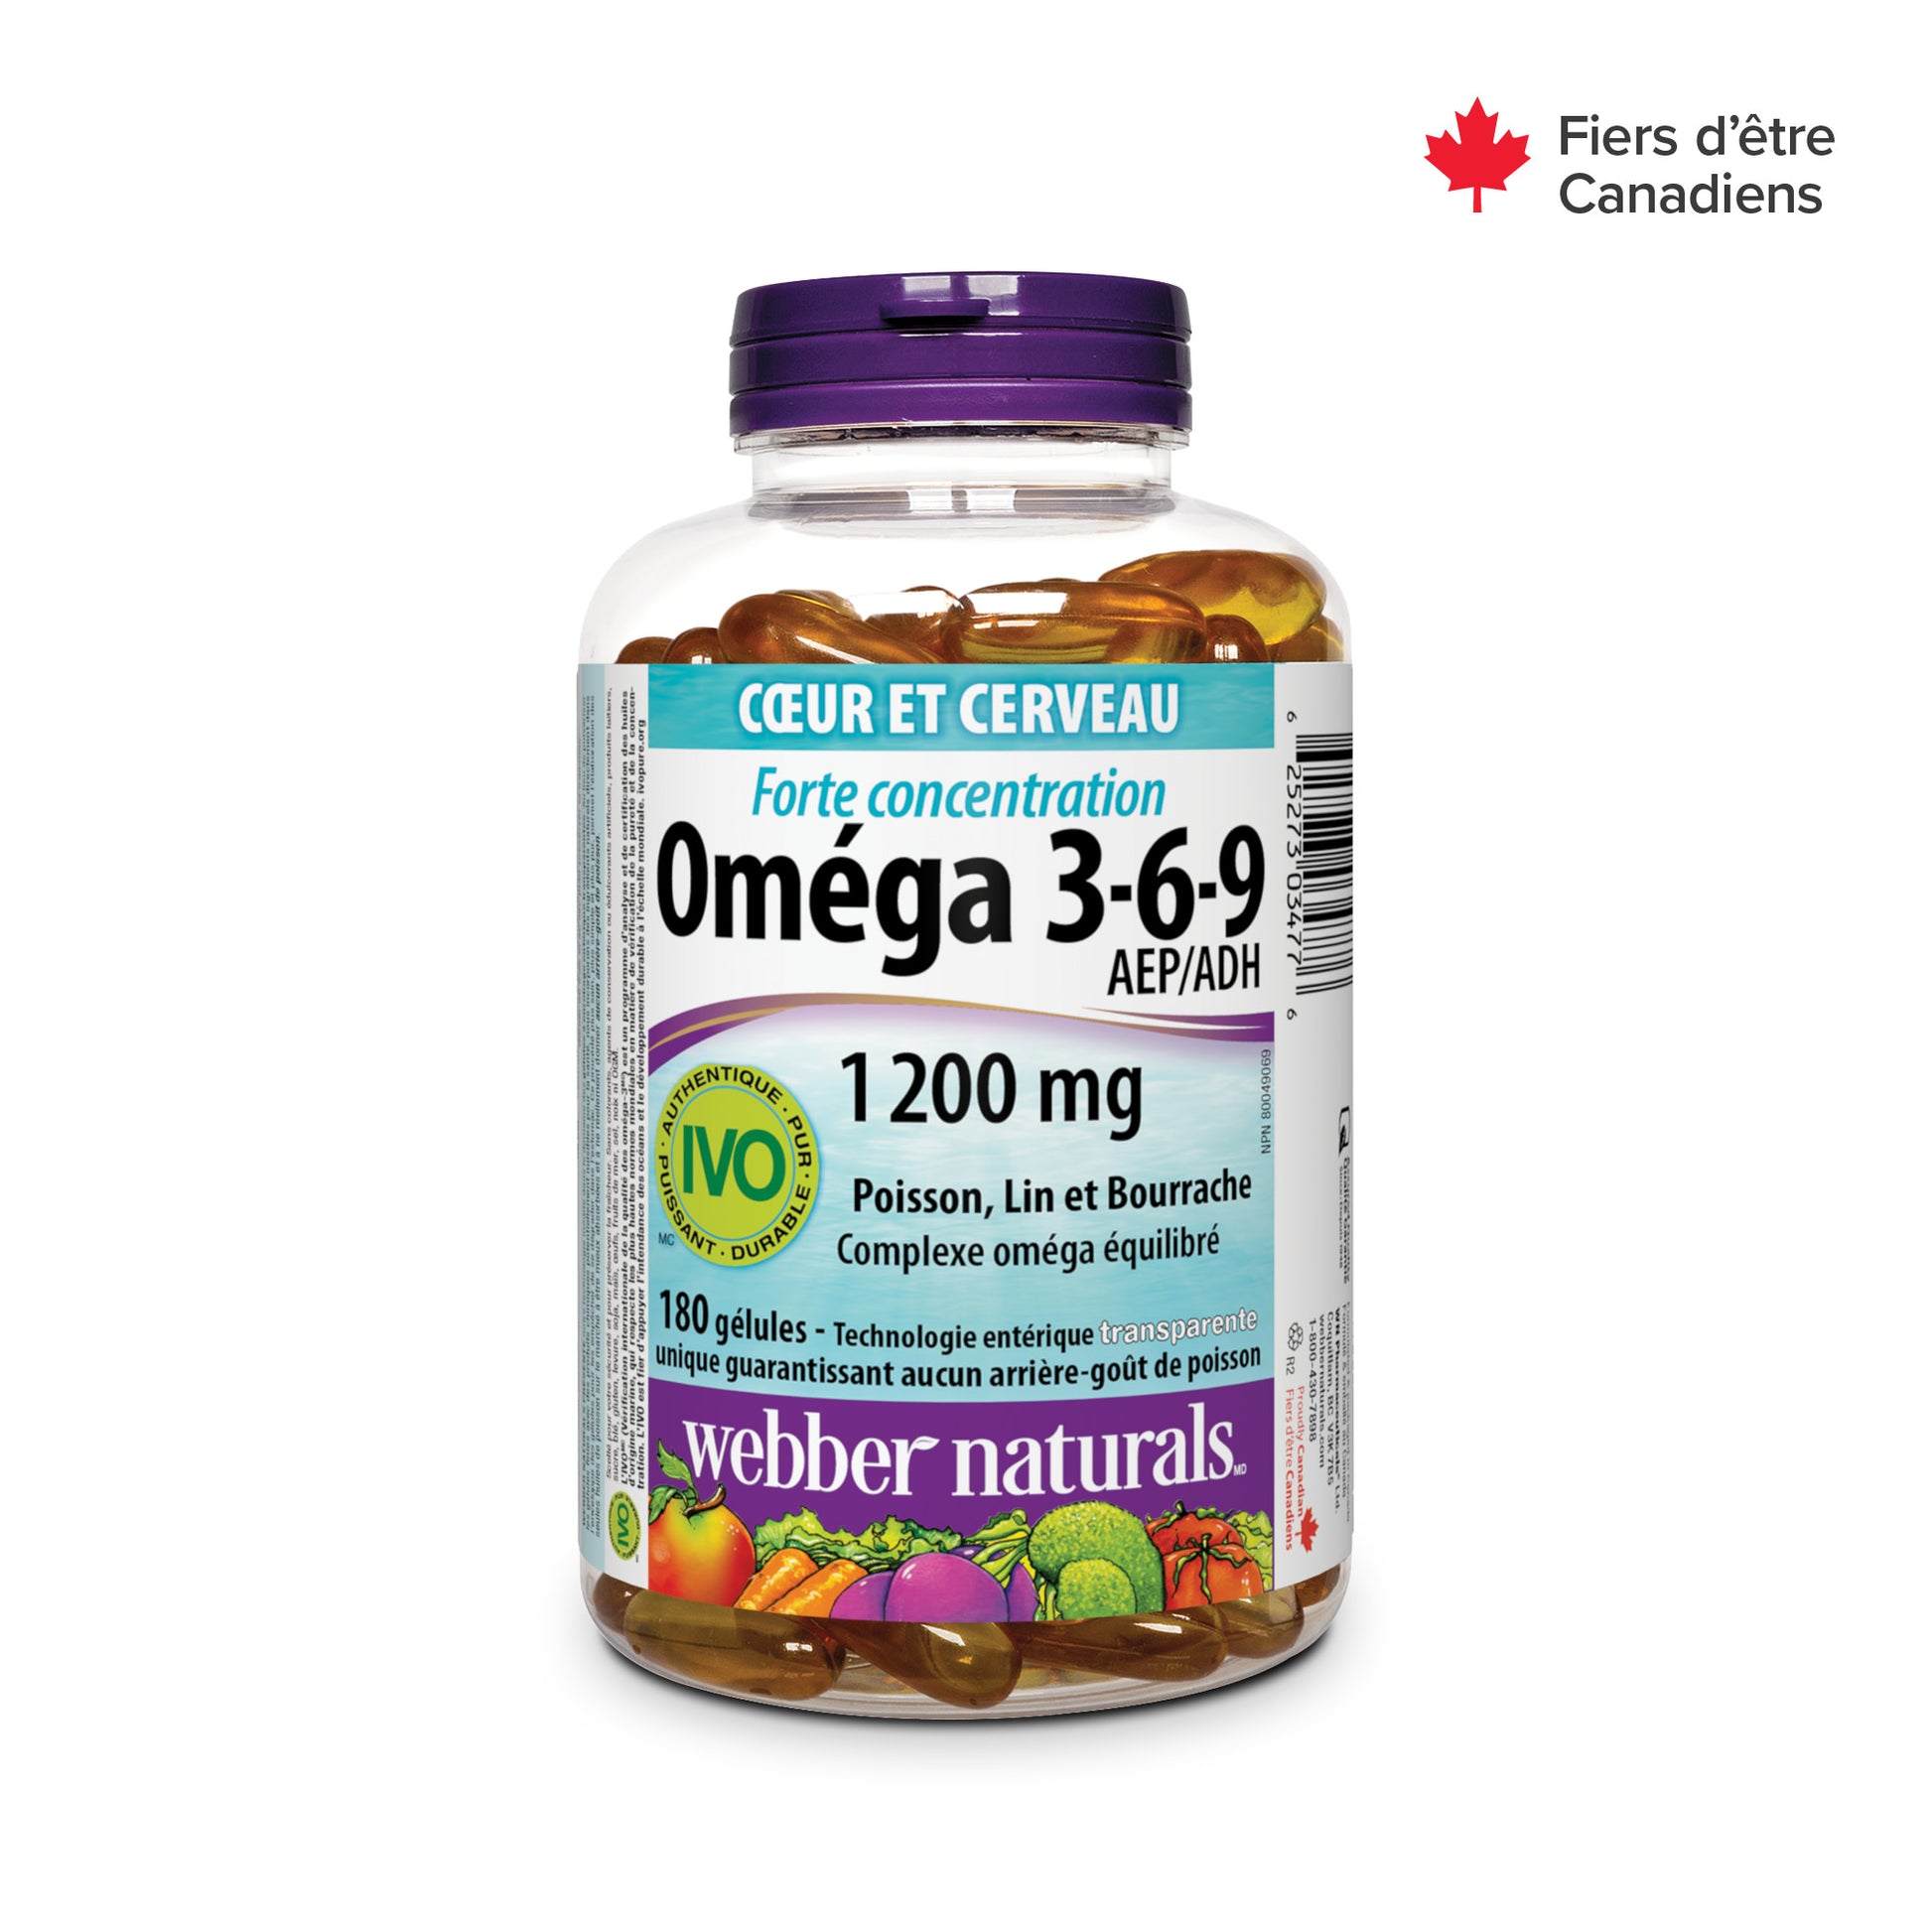 Oméga 3-6-9 Forte concentration Poisson, Lin et Bourrache 1 200 mg for Webber Naturals|v|hi-res|WN3477